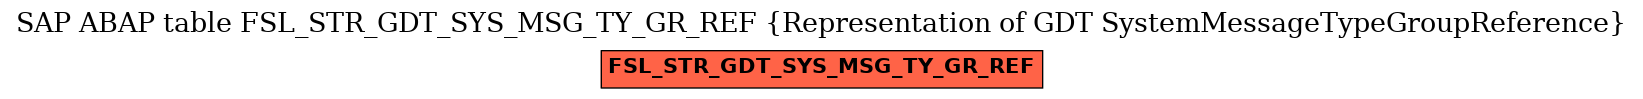 E-R Diagram for table FSL_STR_GDT_SYS_MSG_TY_GR_REF (Representation of GDT SystemMessageTypeGroupReference)